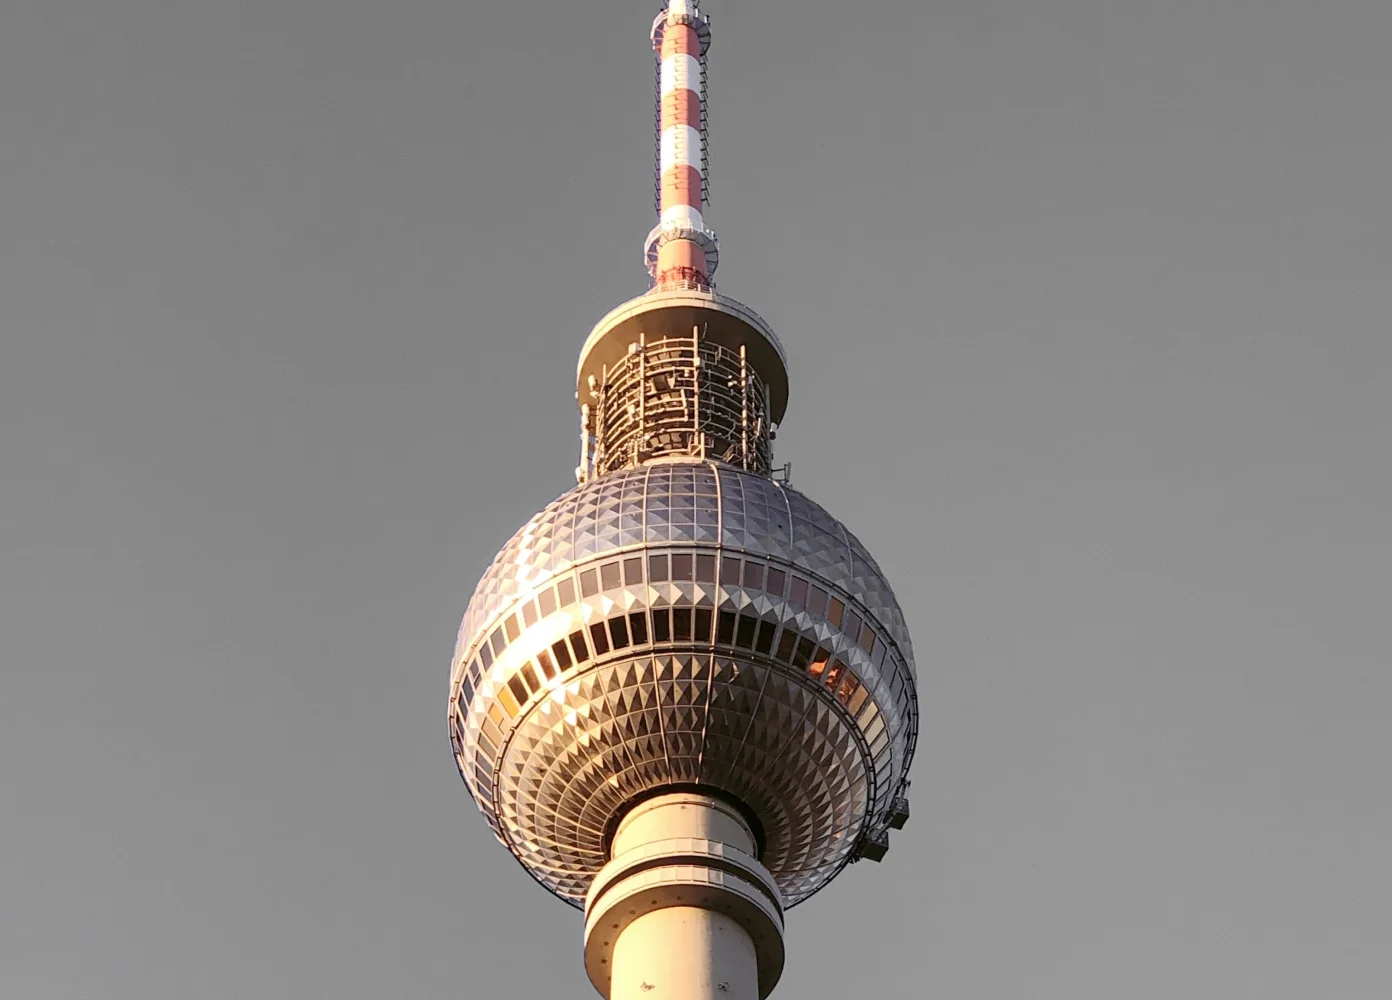 Fernsehturm in Berlin bei Sonnenuntergang